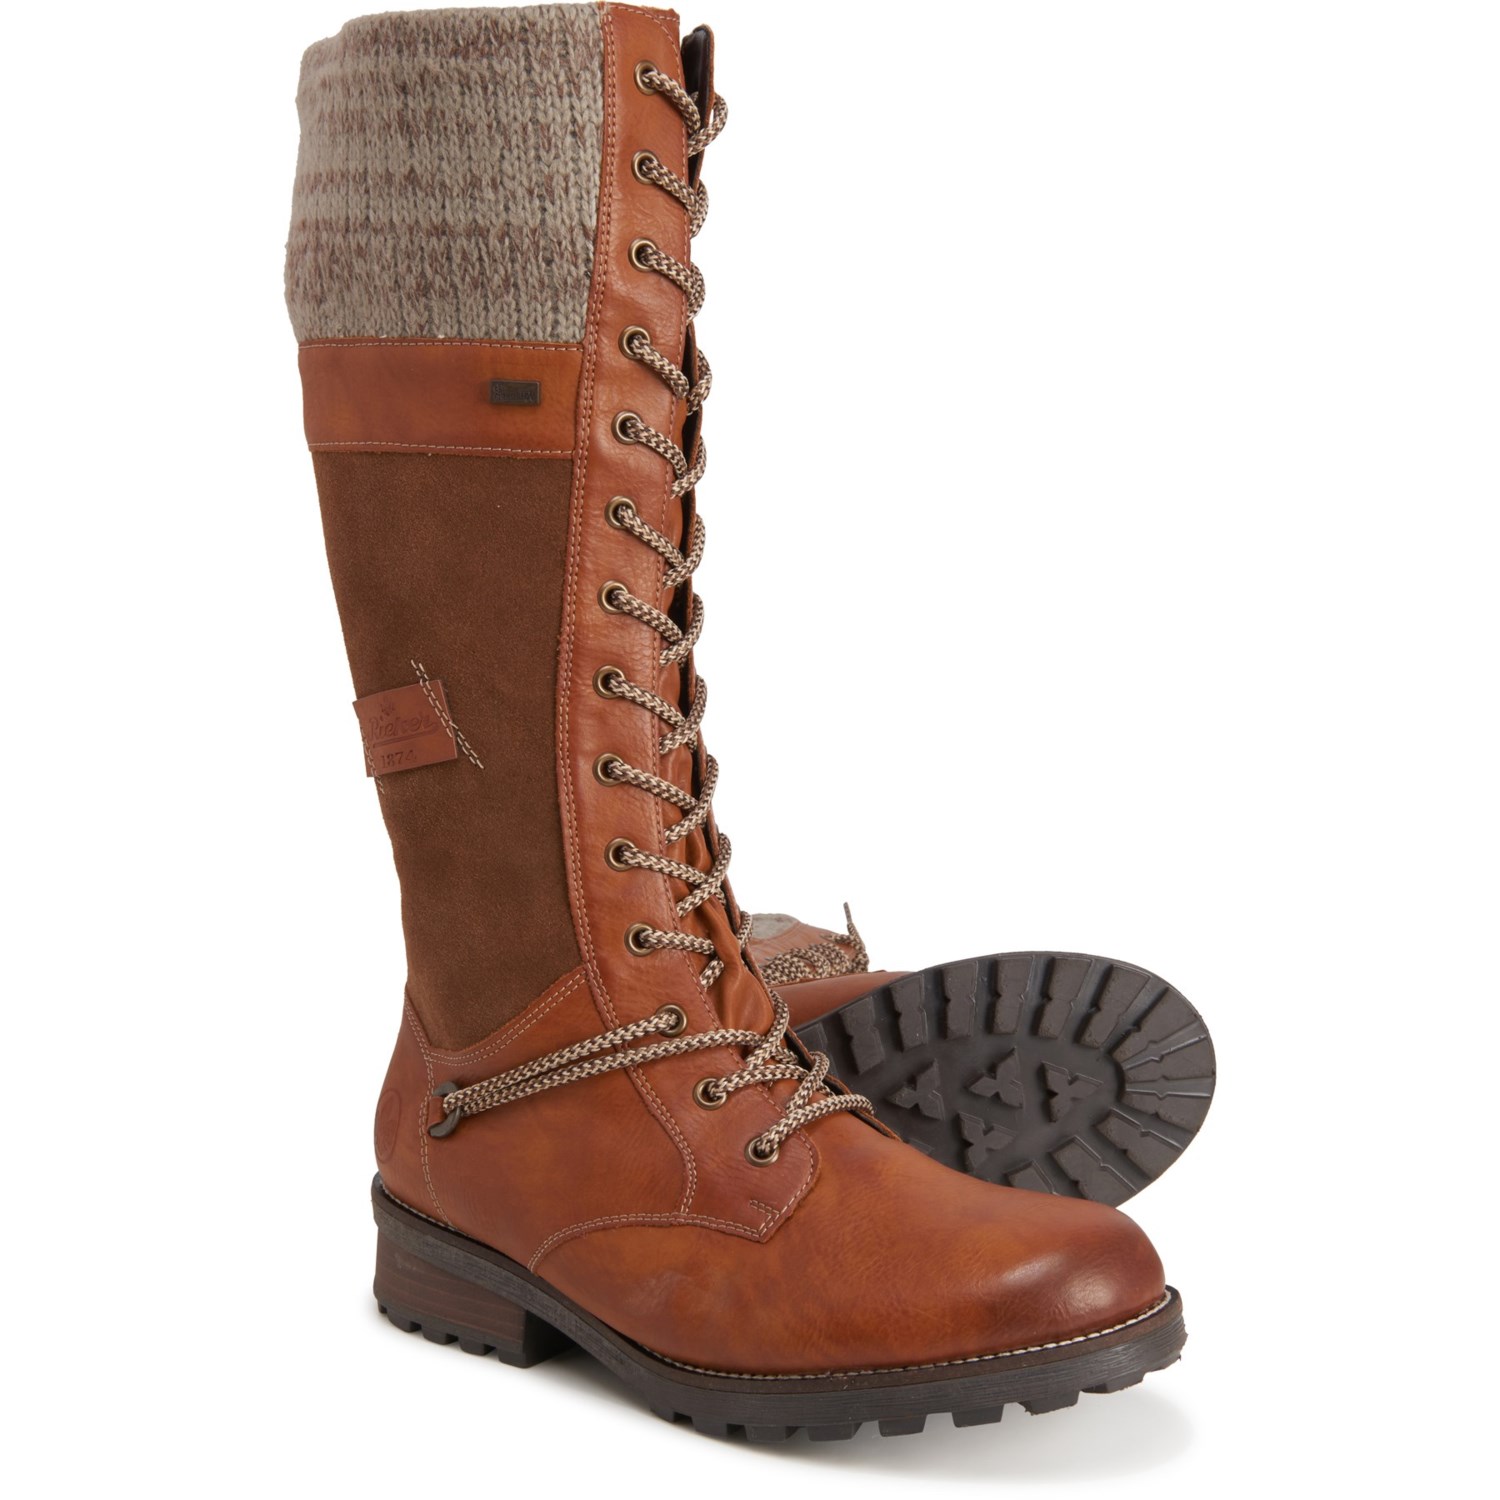 rieker wool lined boots